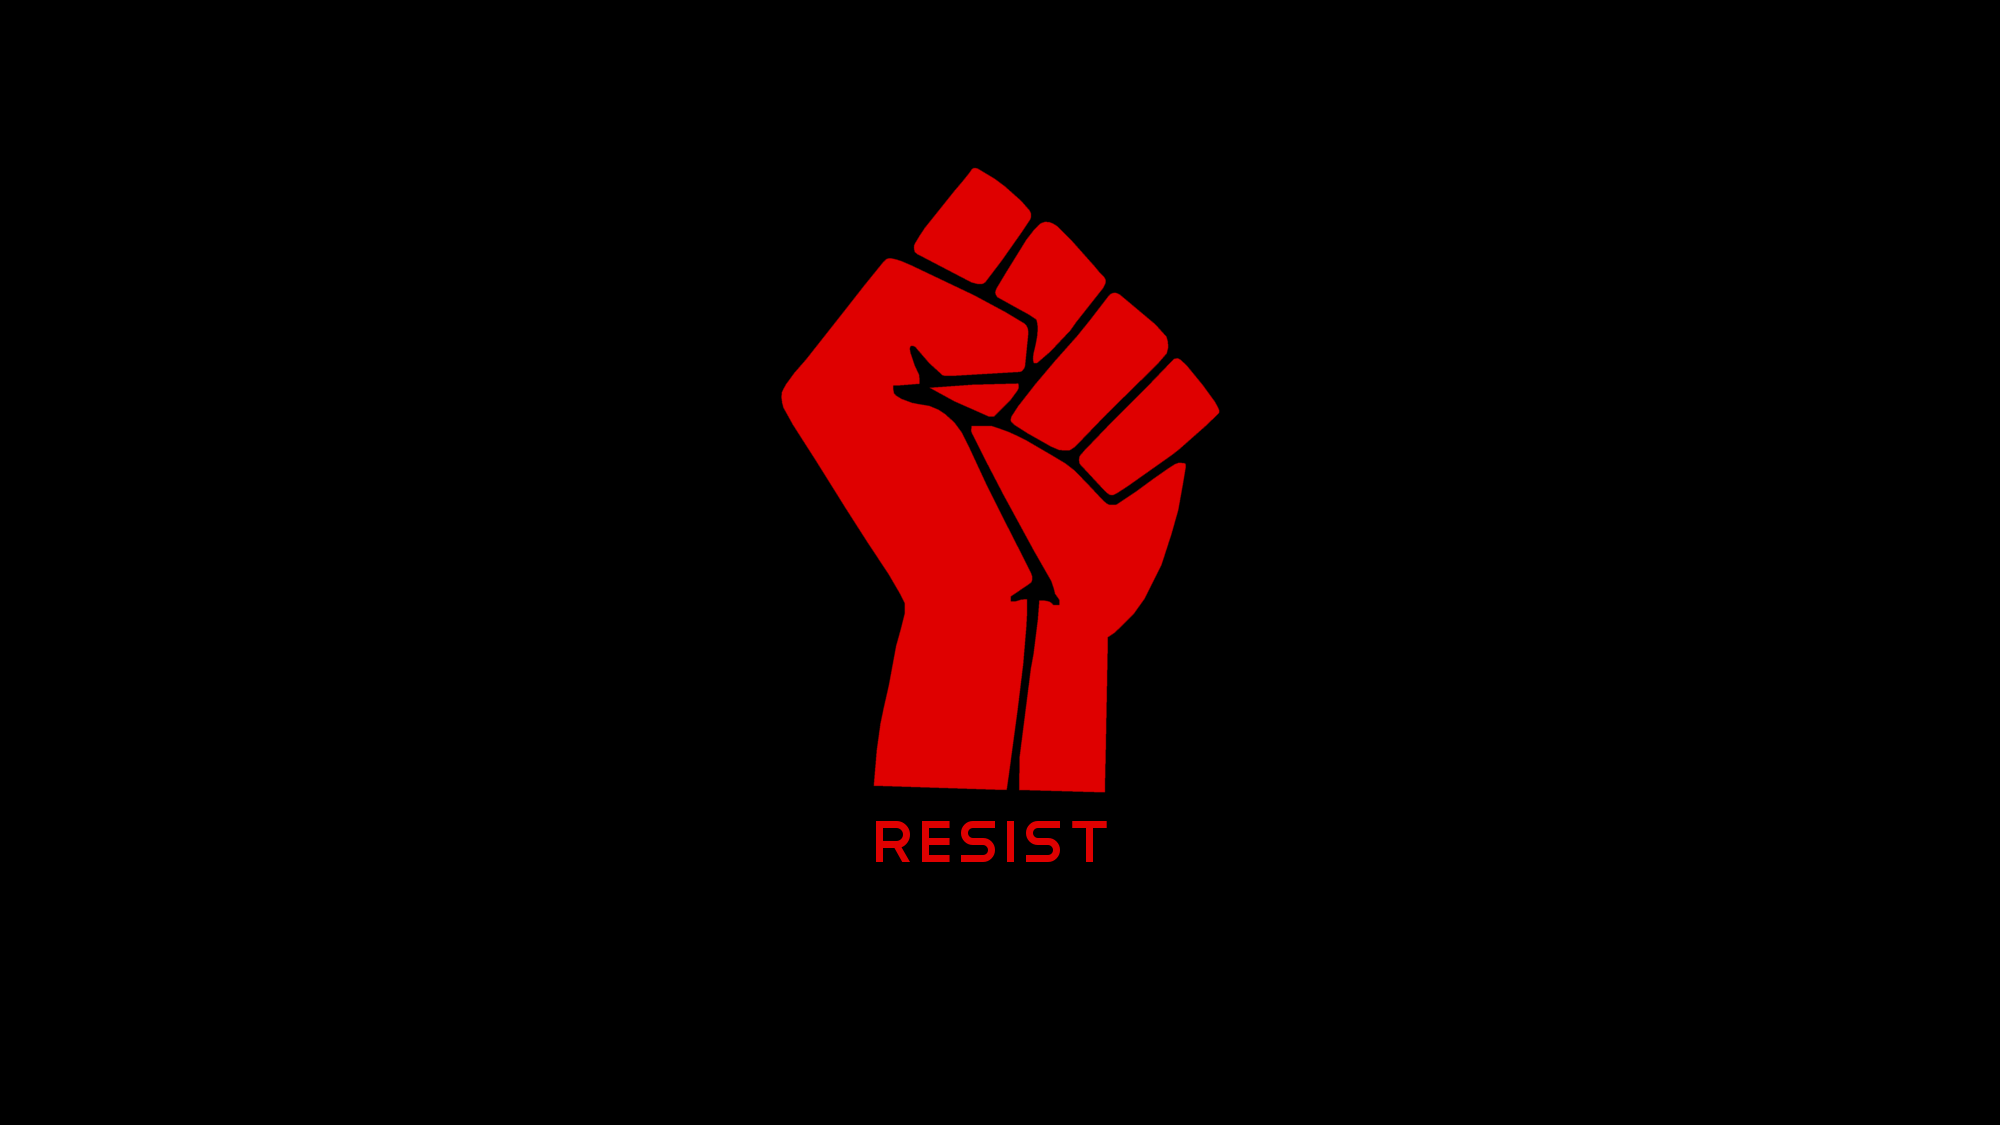 Dom Resistance Wallpaper Revolution